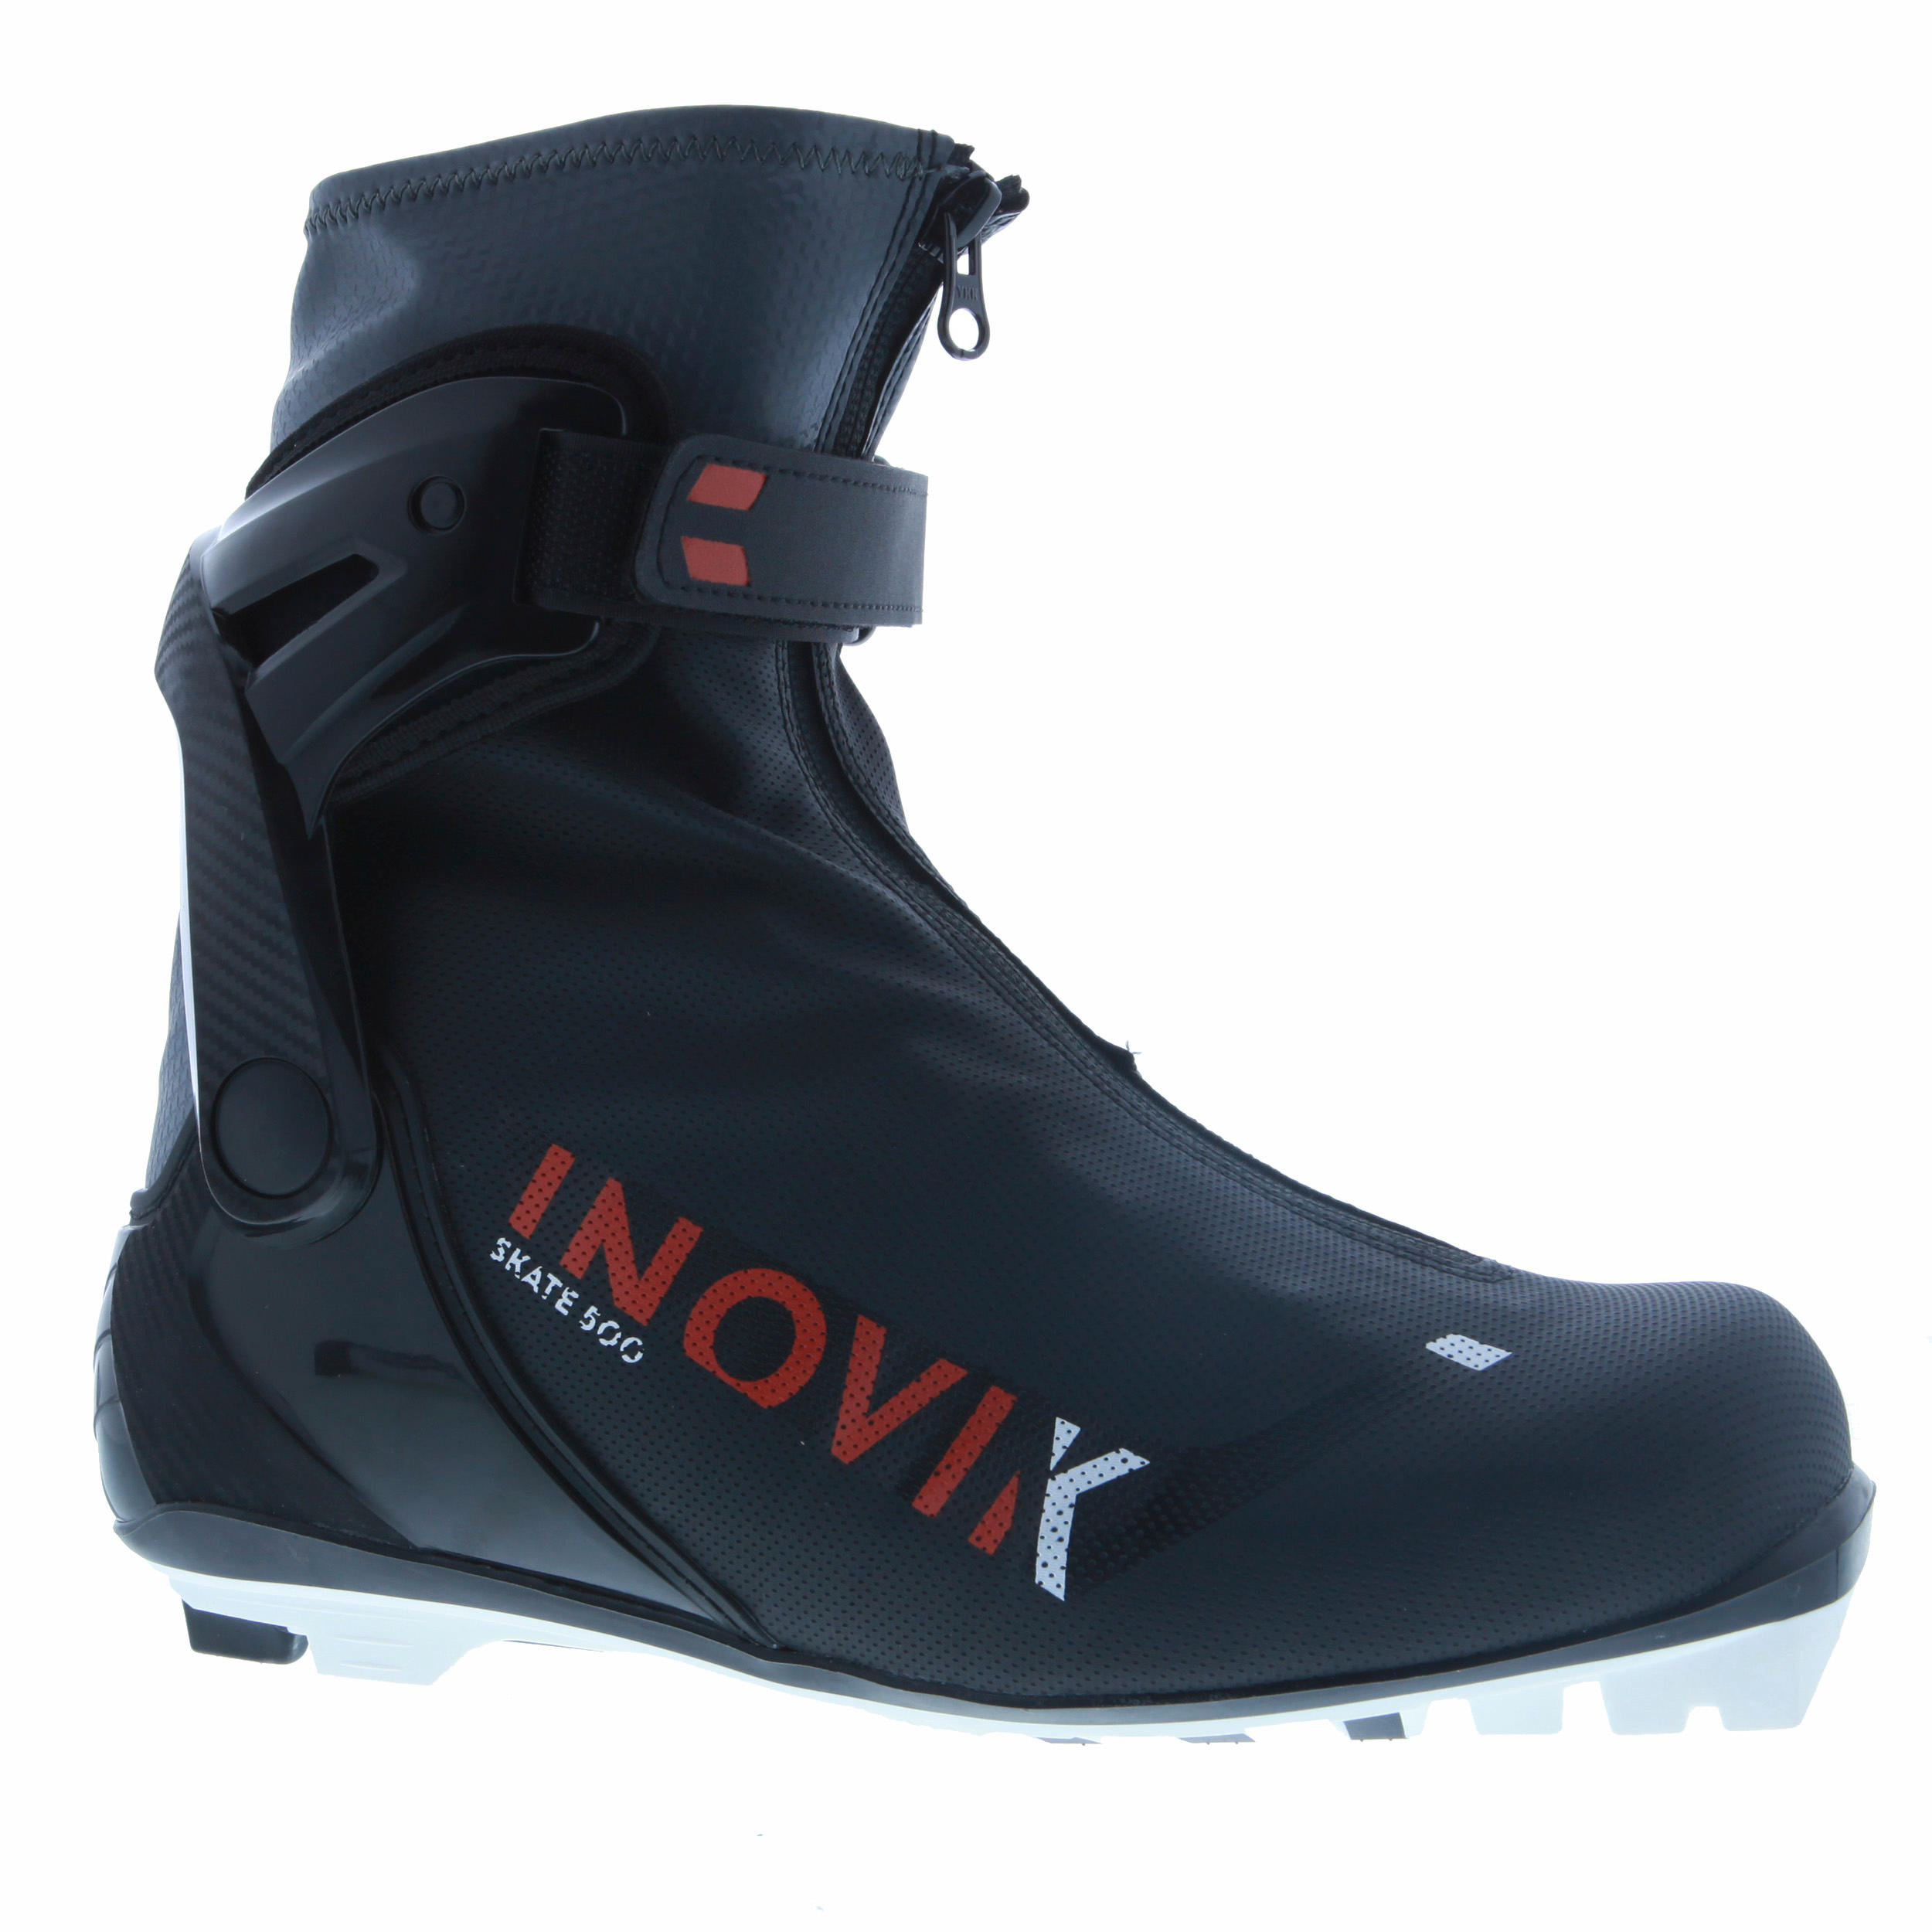 roller ski boots